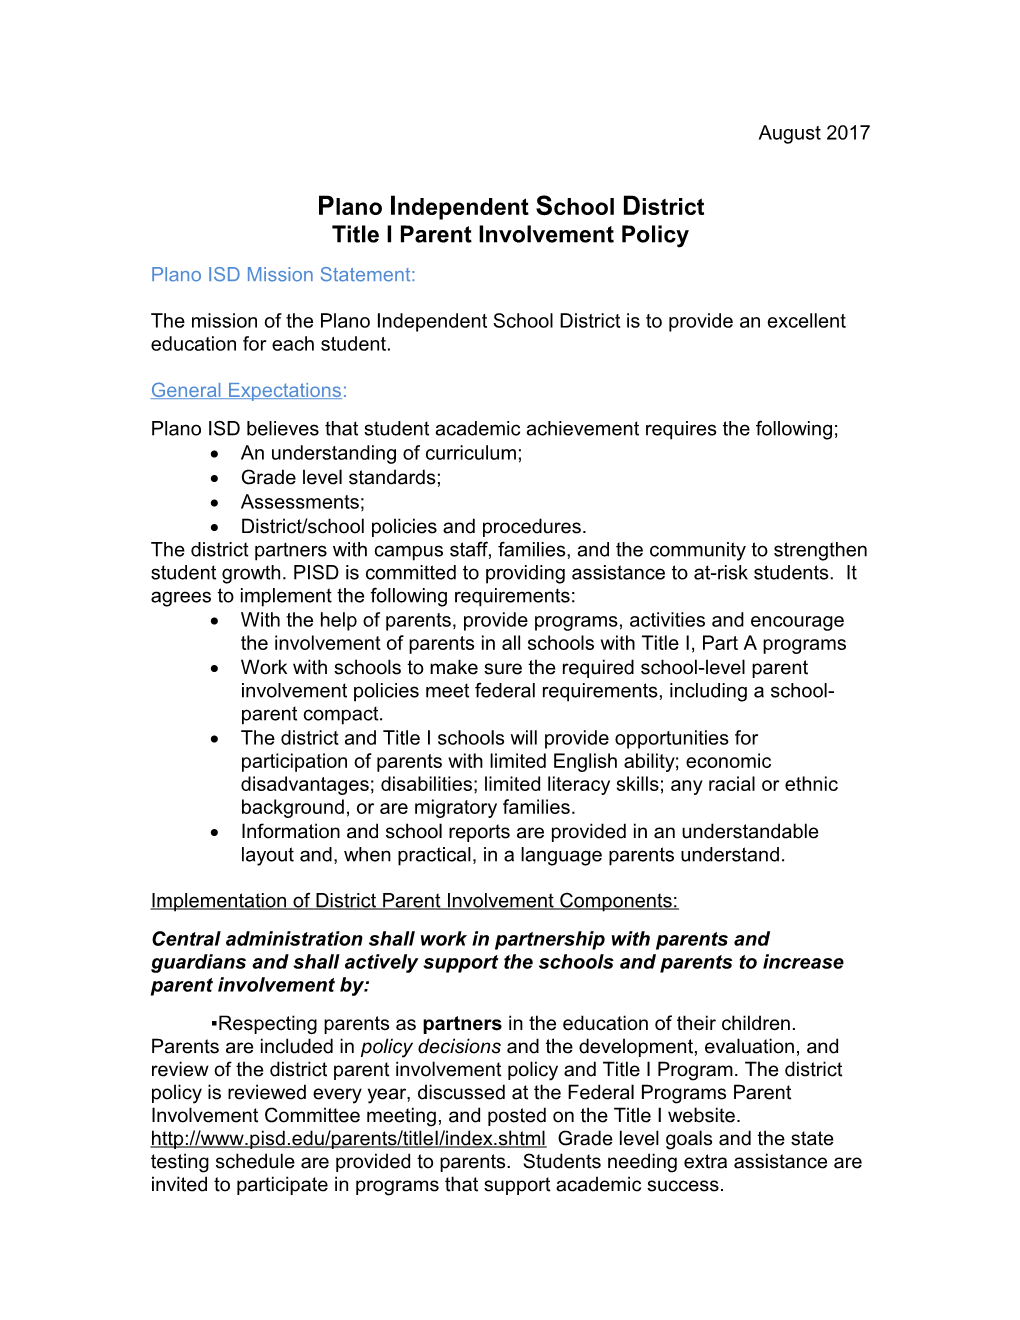 Plano Independent School District s5